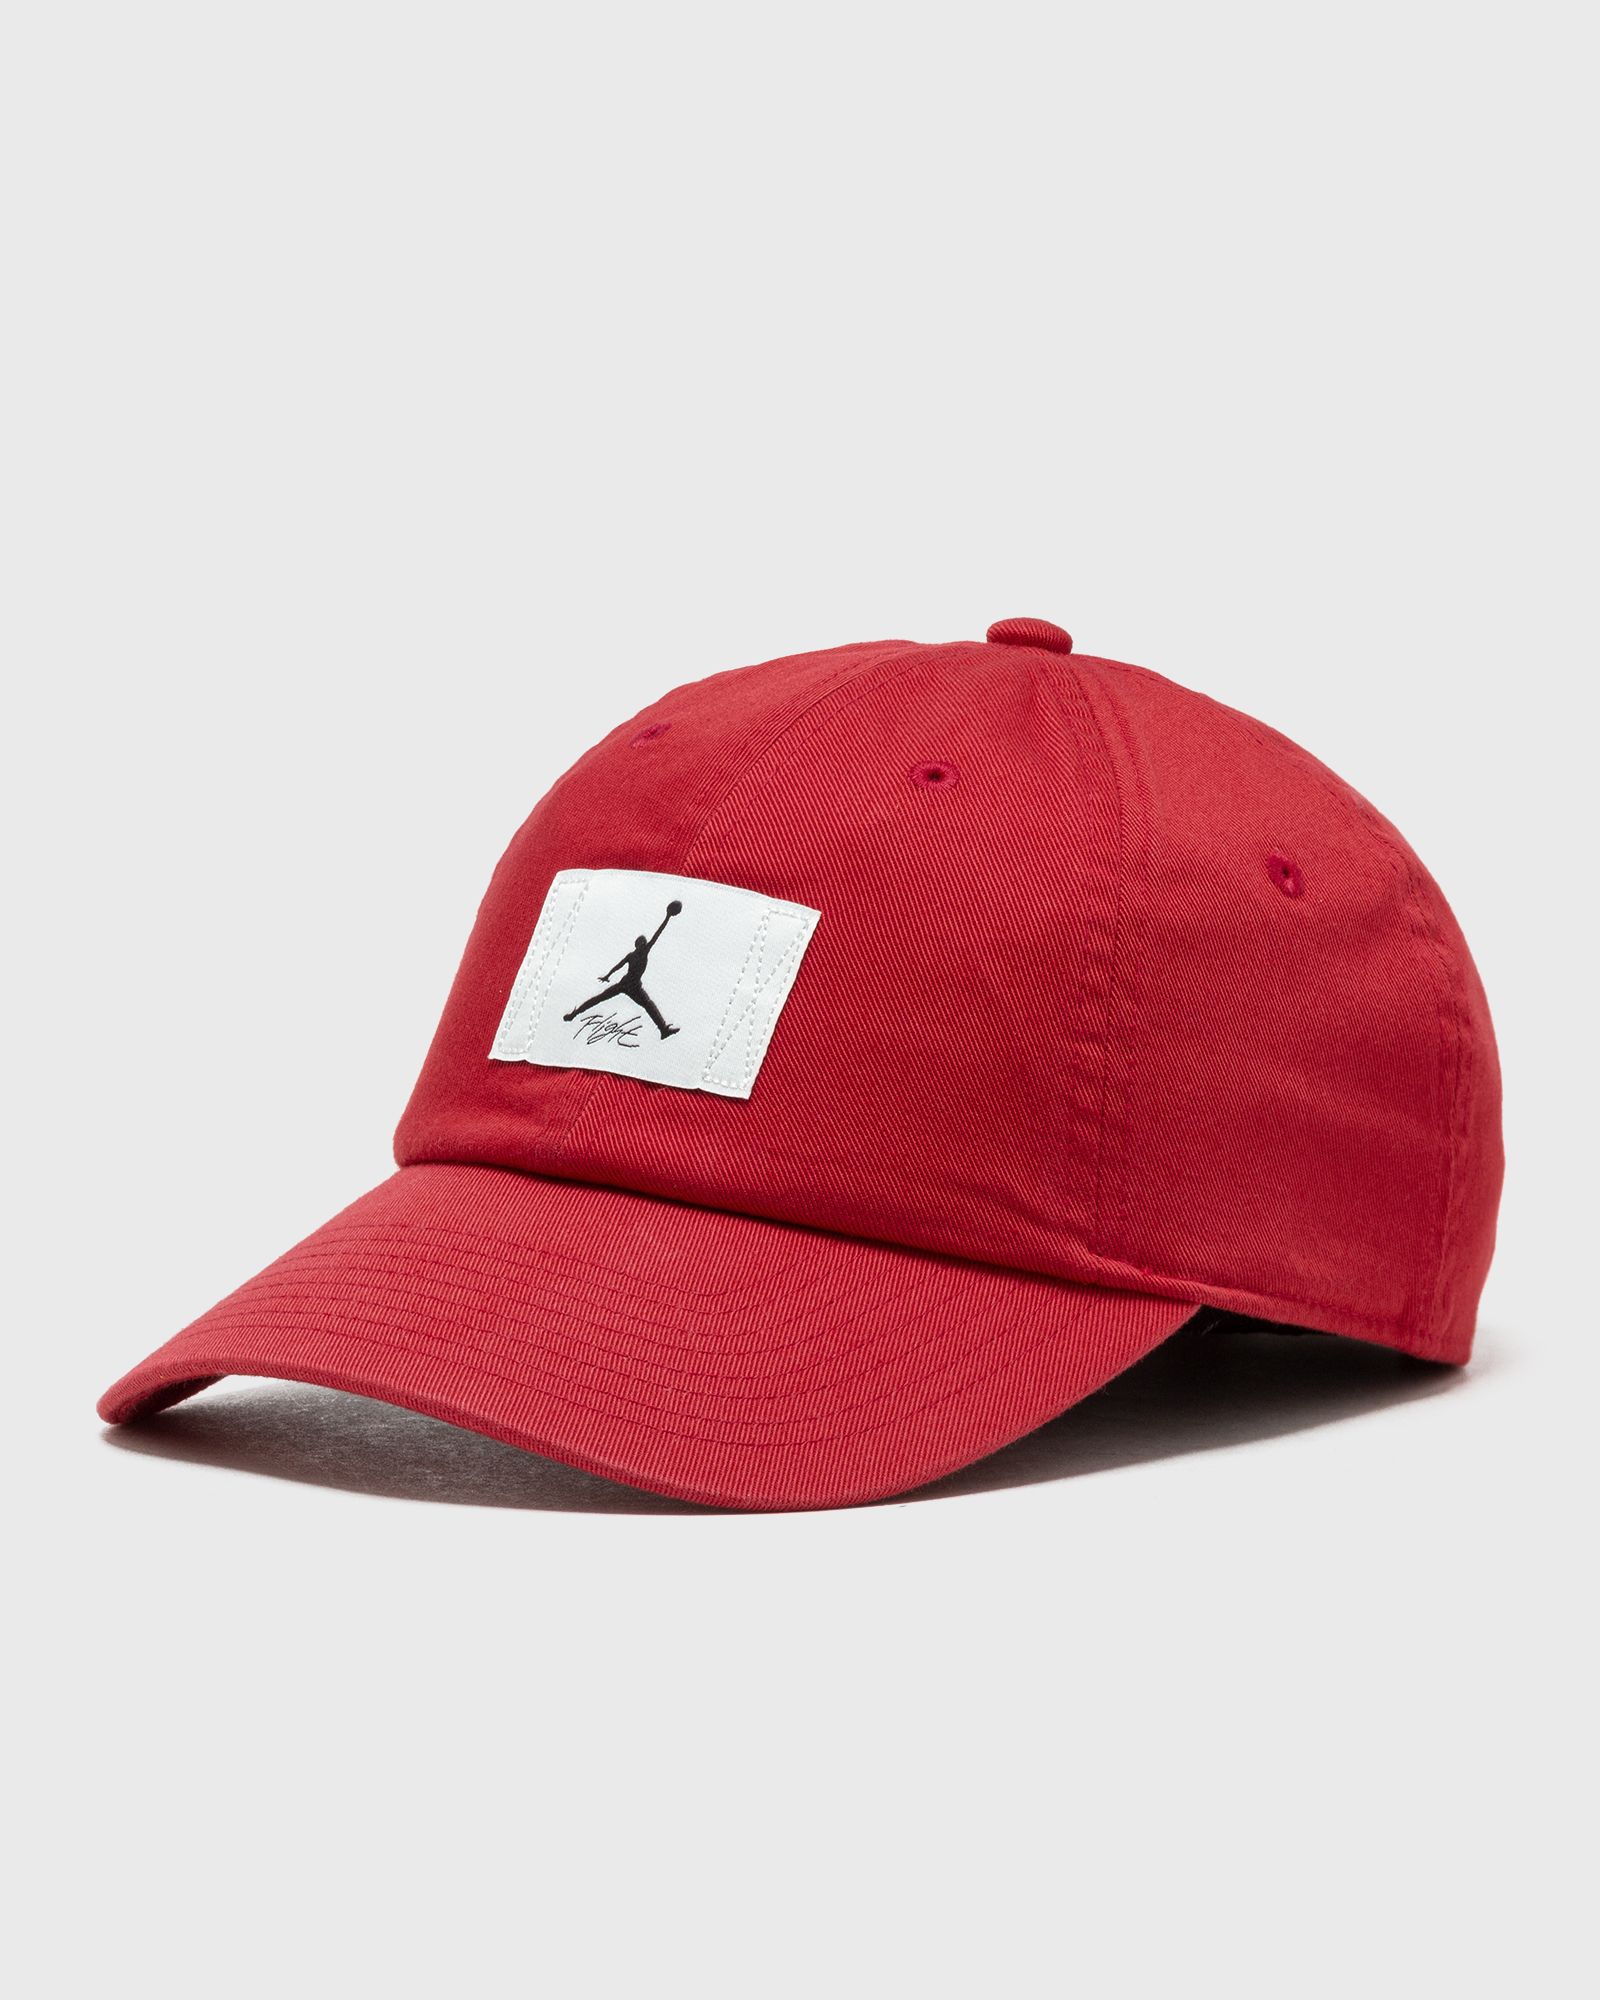 Jordan - club cap adjustable hat men caps red in größe:l/xl